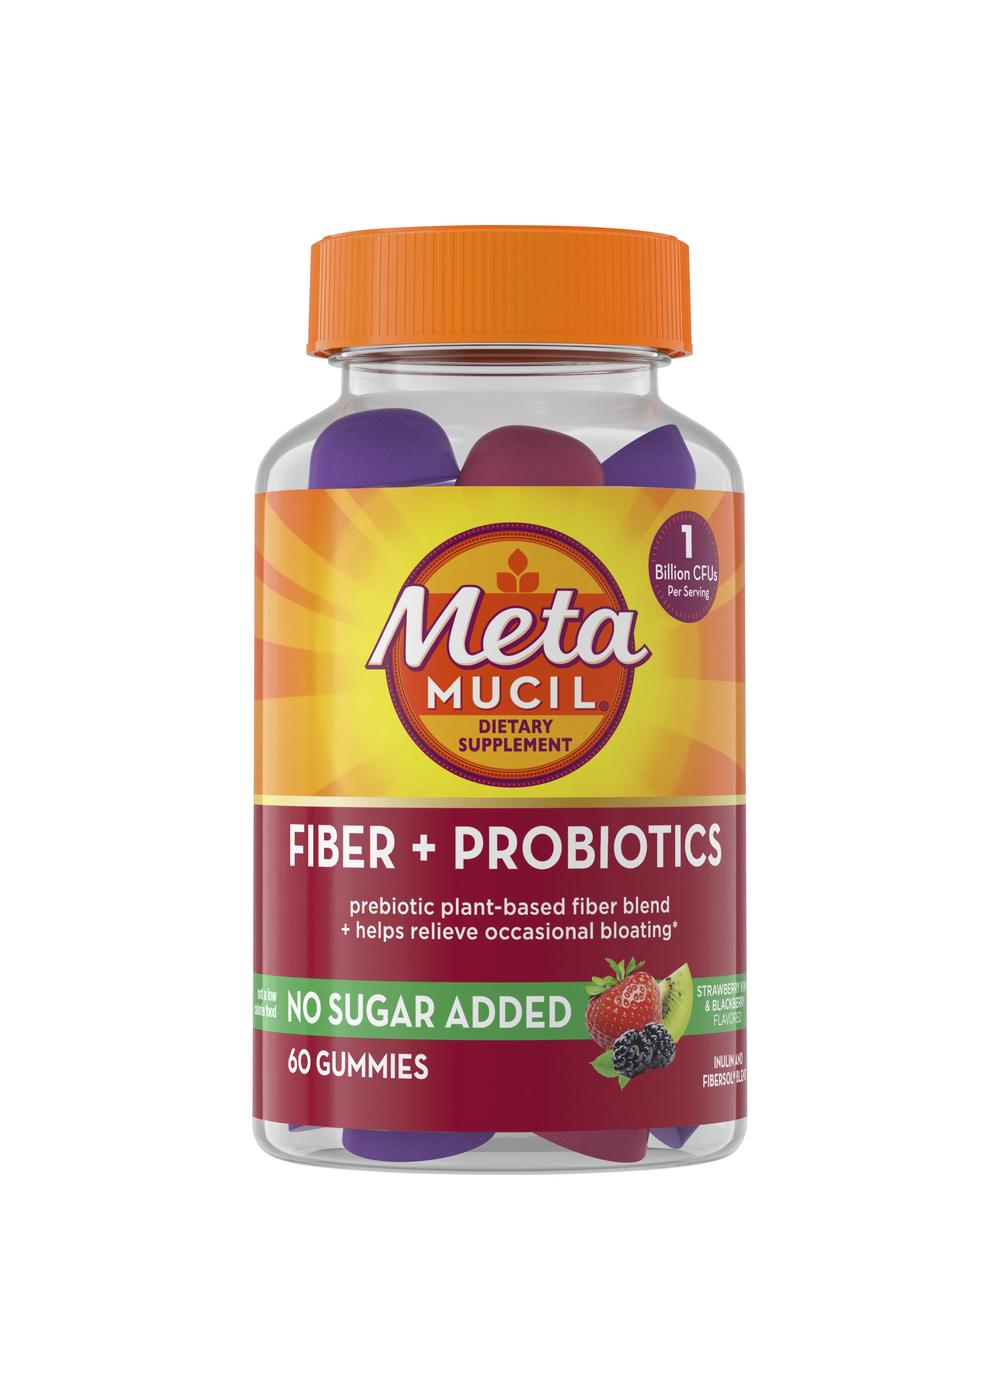 Metamucil Fiber + Probiotic No Sugar Added Gummies - Strawberry Kiwi & Blackberry; image 1 of 4